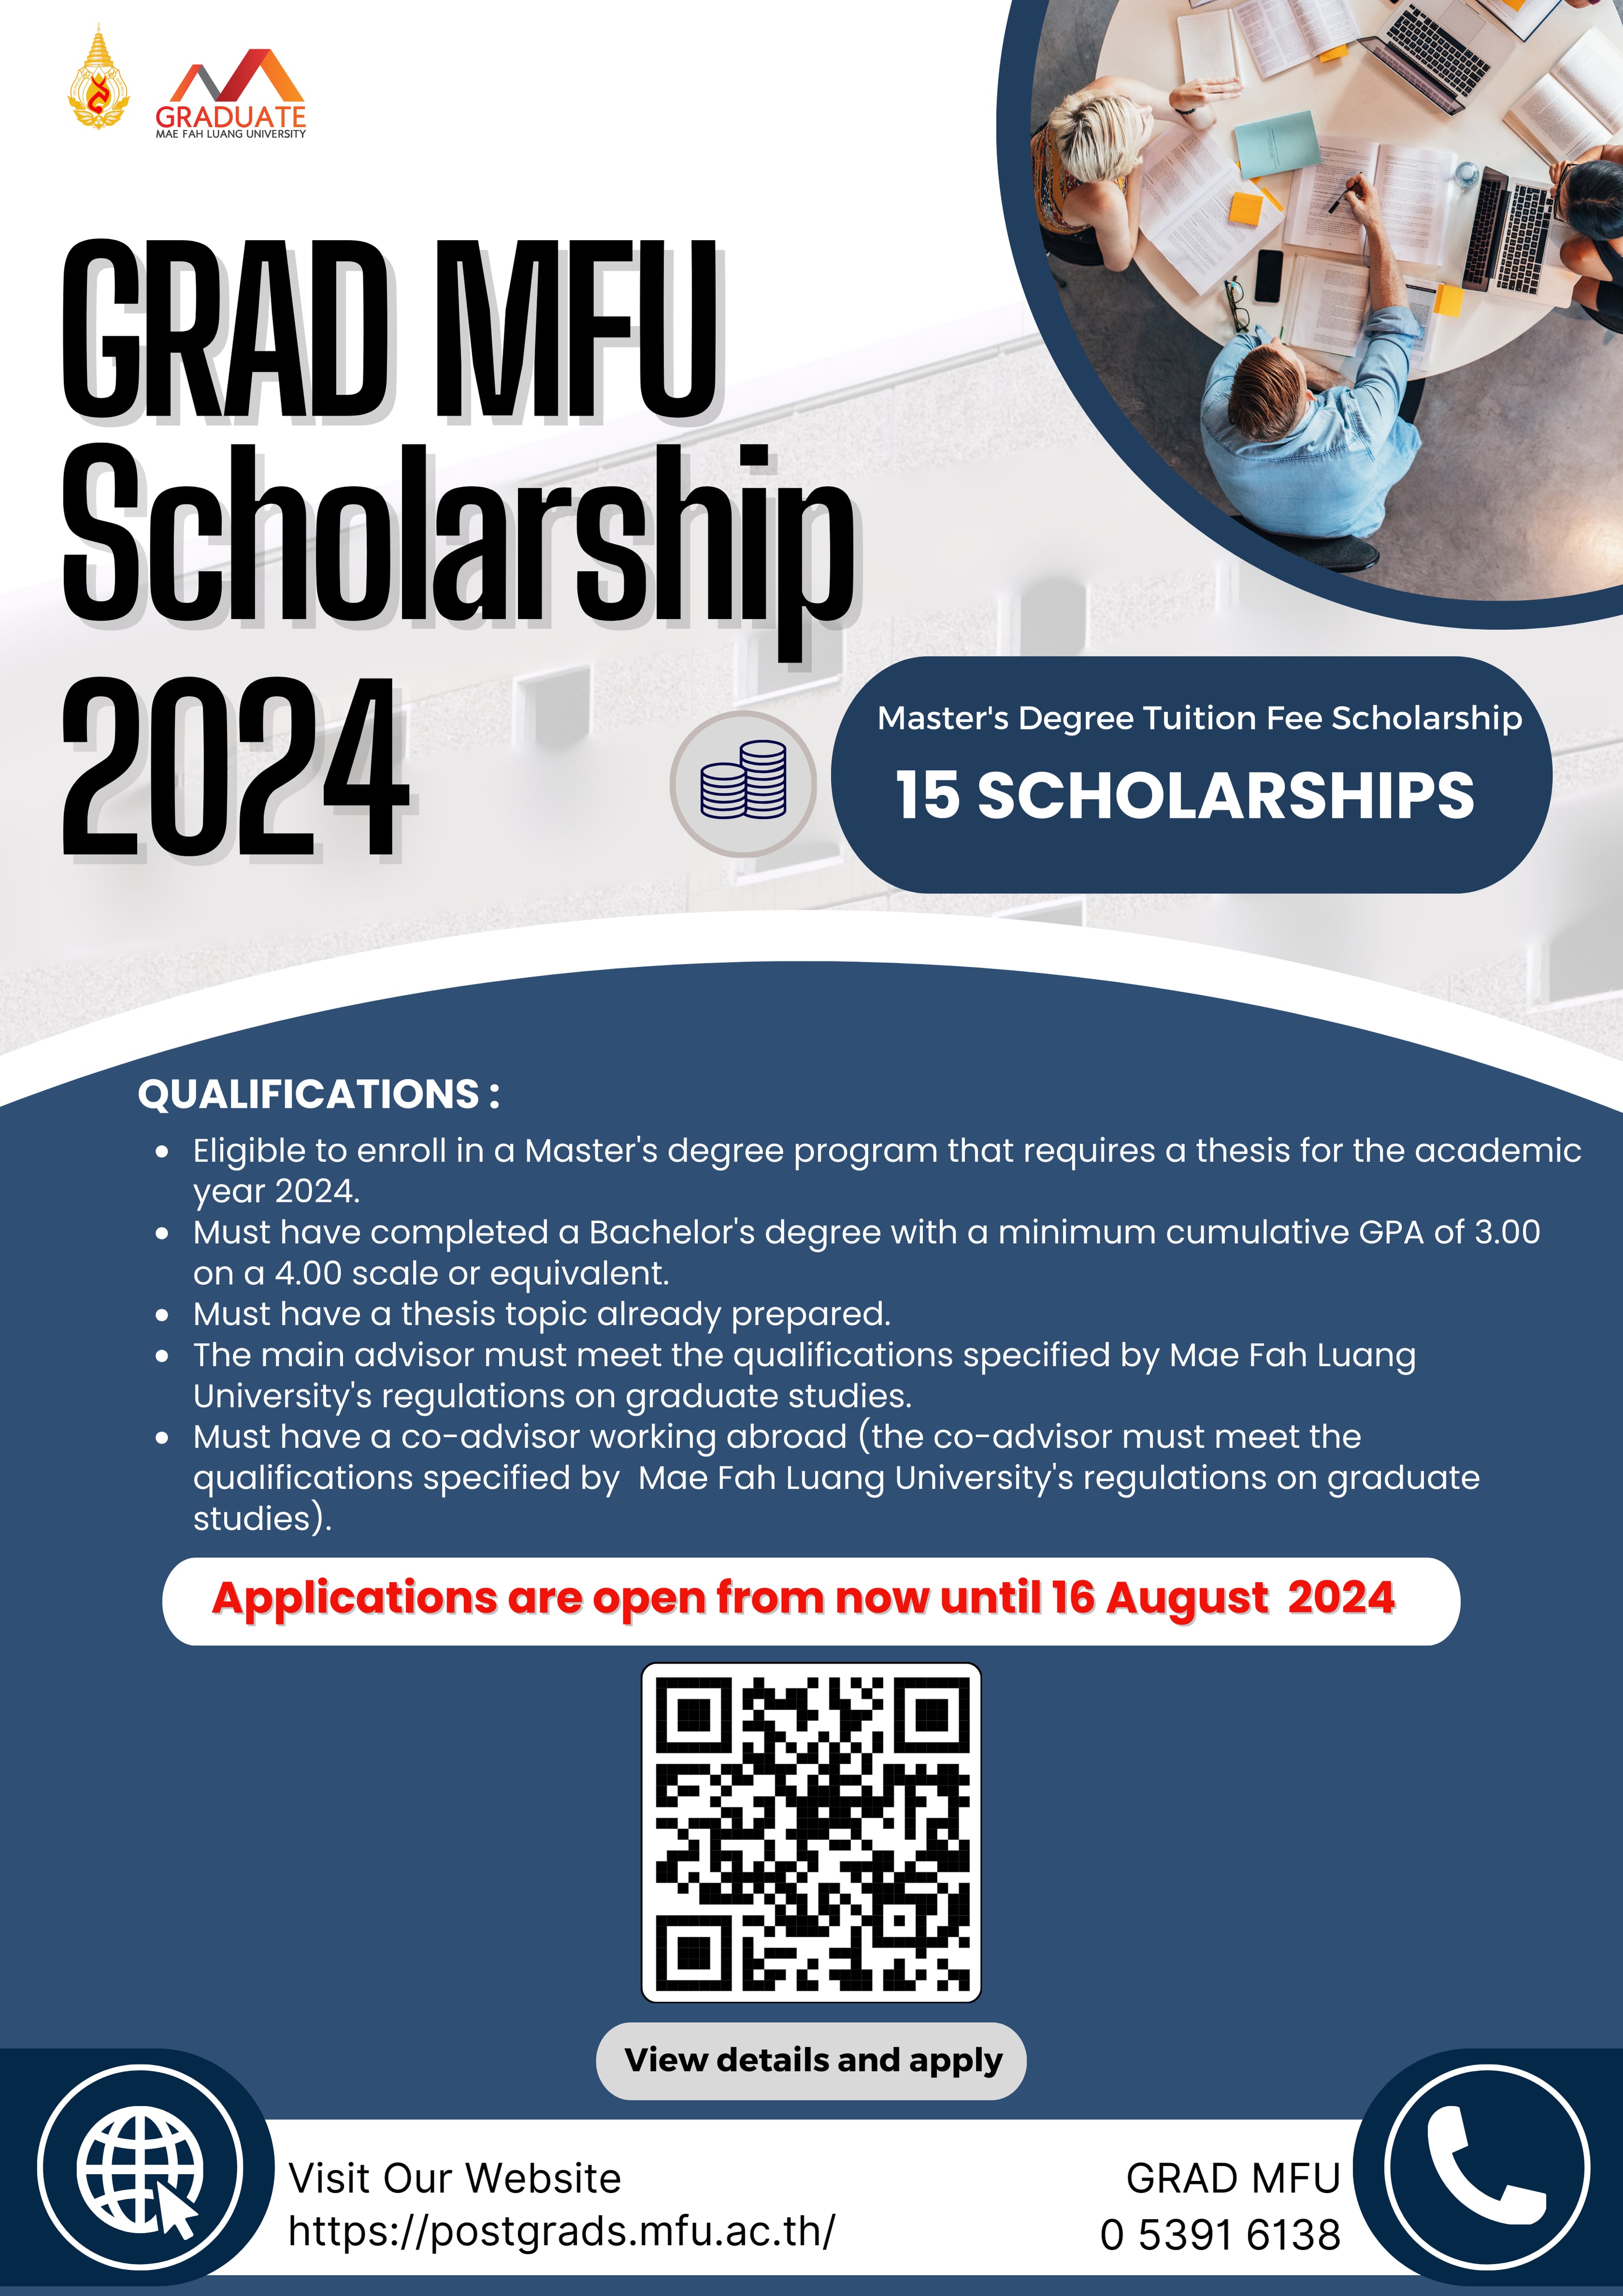 Grad MFU Scholarship 2024 for Master's Degree Programmes